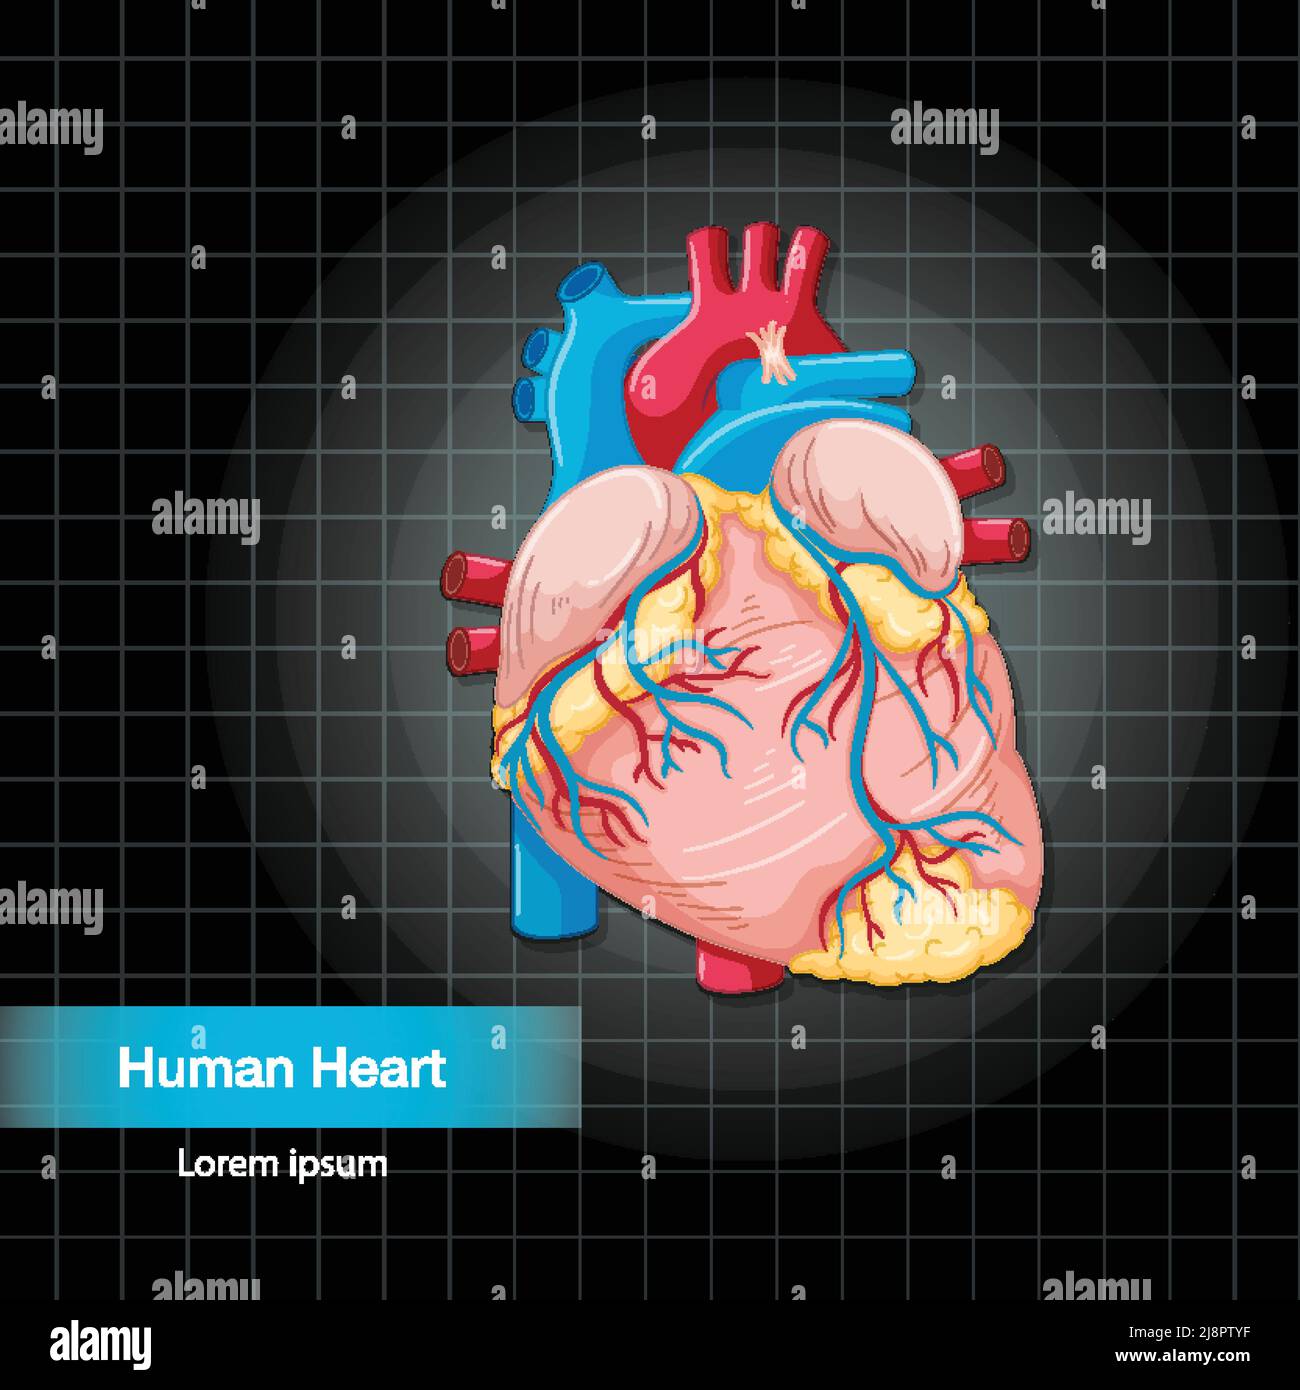 Human internal organ with heart illustration Stock Vector